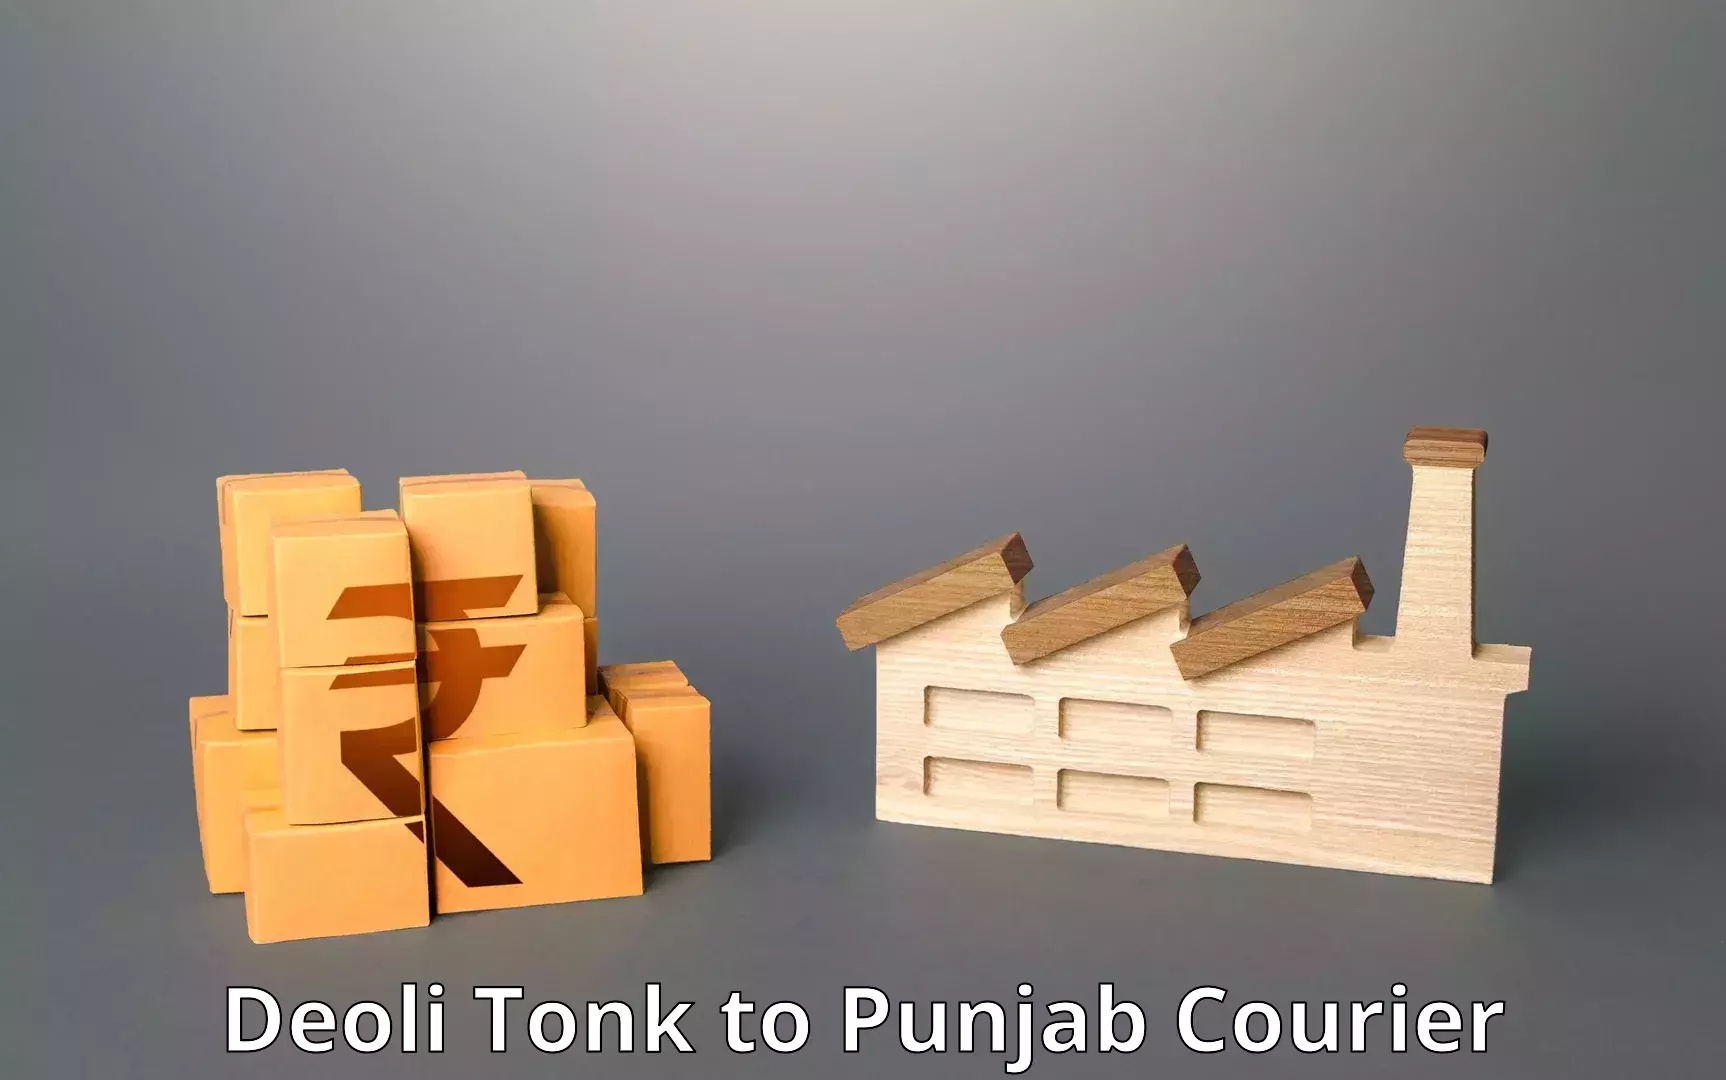 Affordable international shipping Deoli Tonk to Punjab